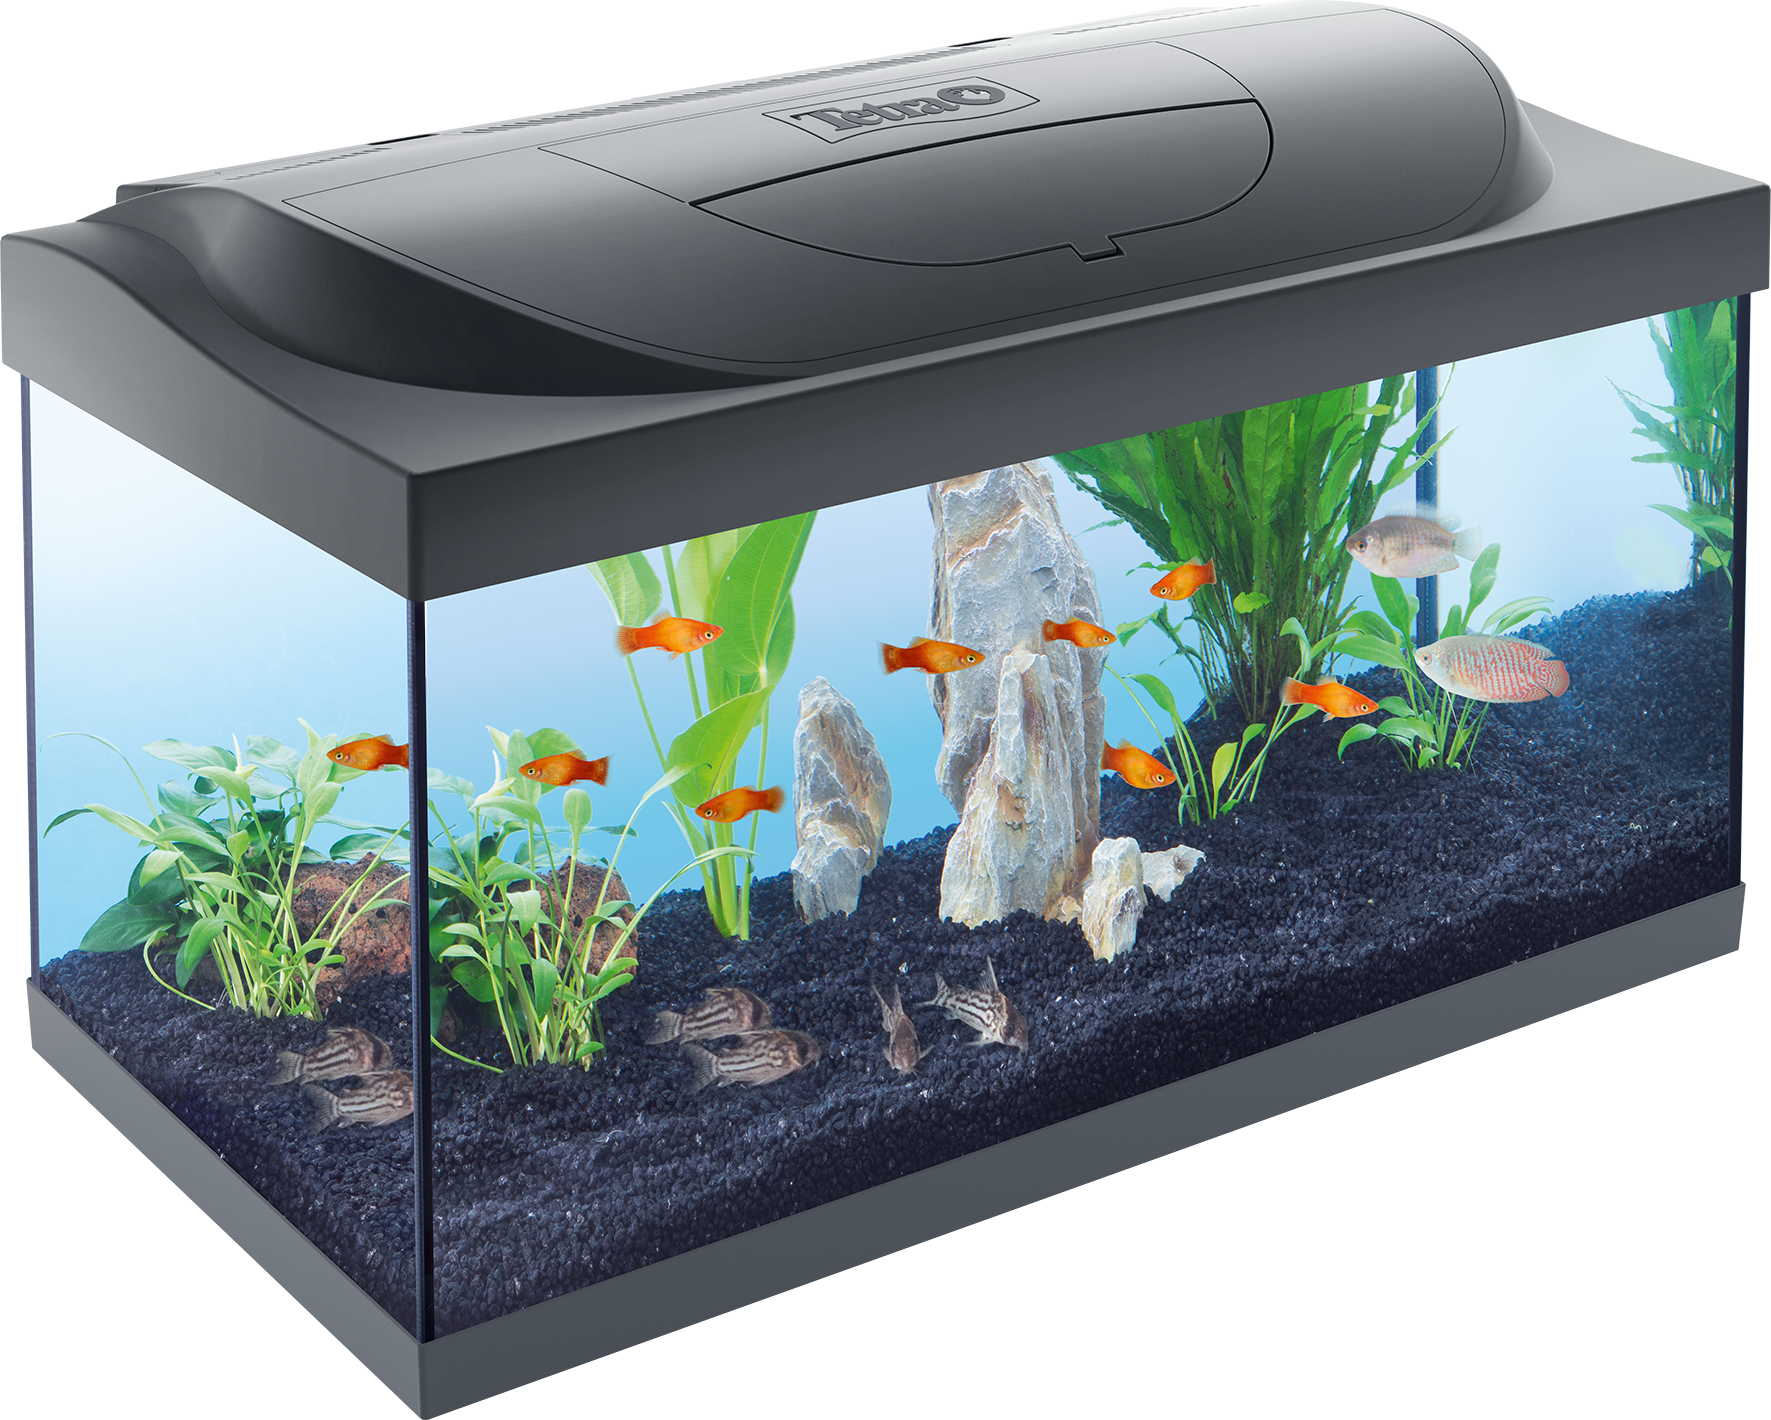 Starter LED 54L aquarium: Tetra